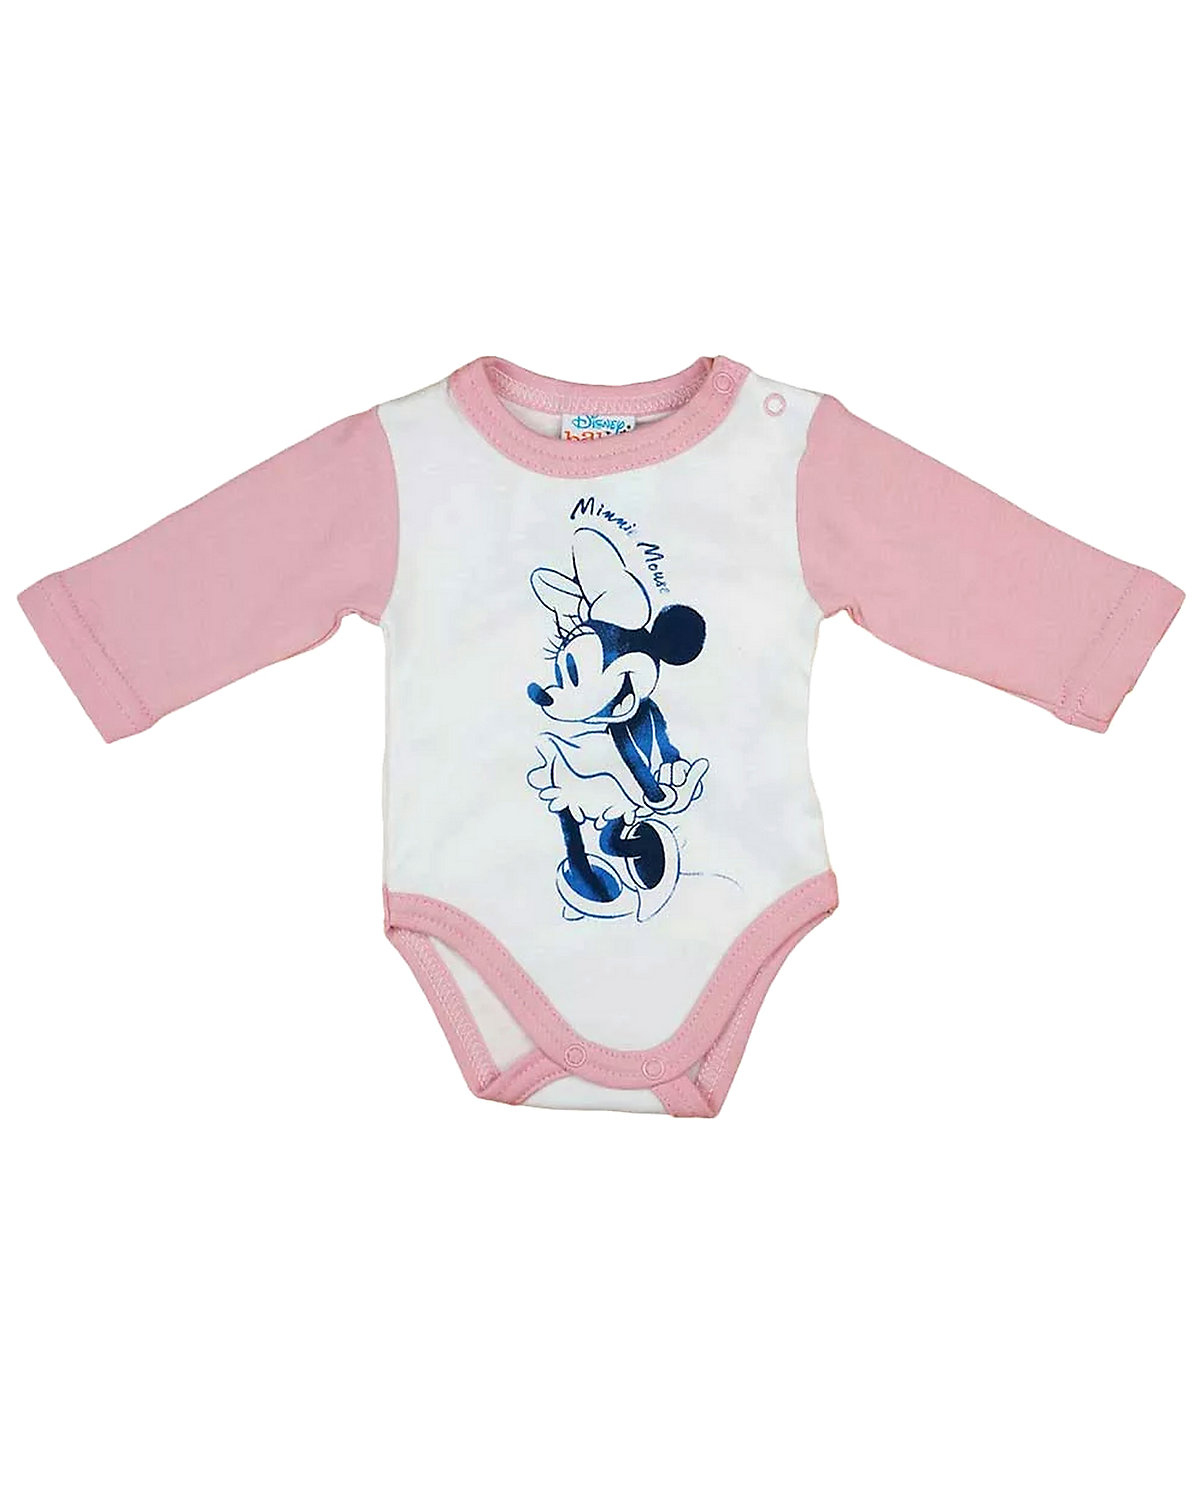 Babybogi Baby Langarmbody Rosa Disney Minnie Maus Retro Style für Mädchen